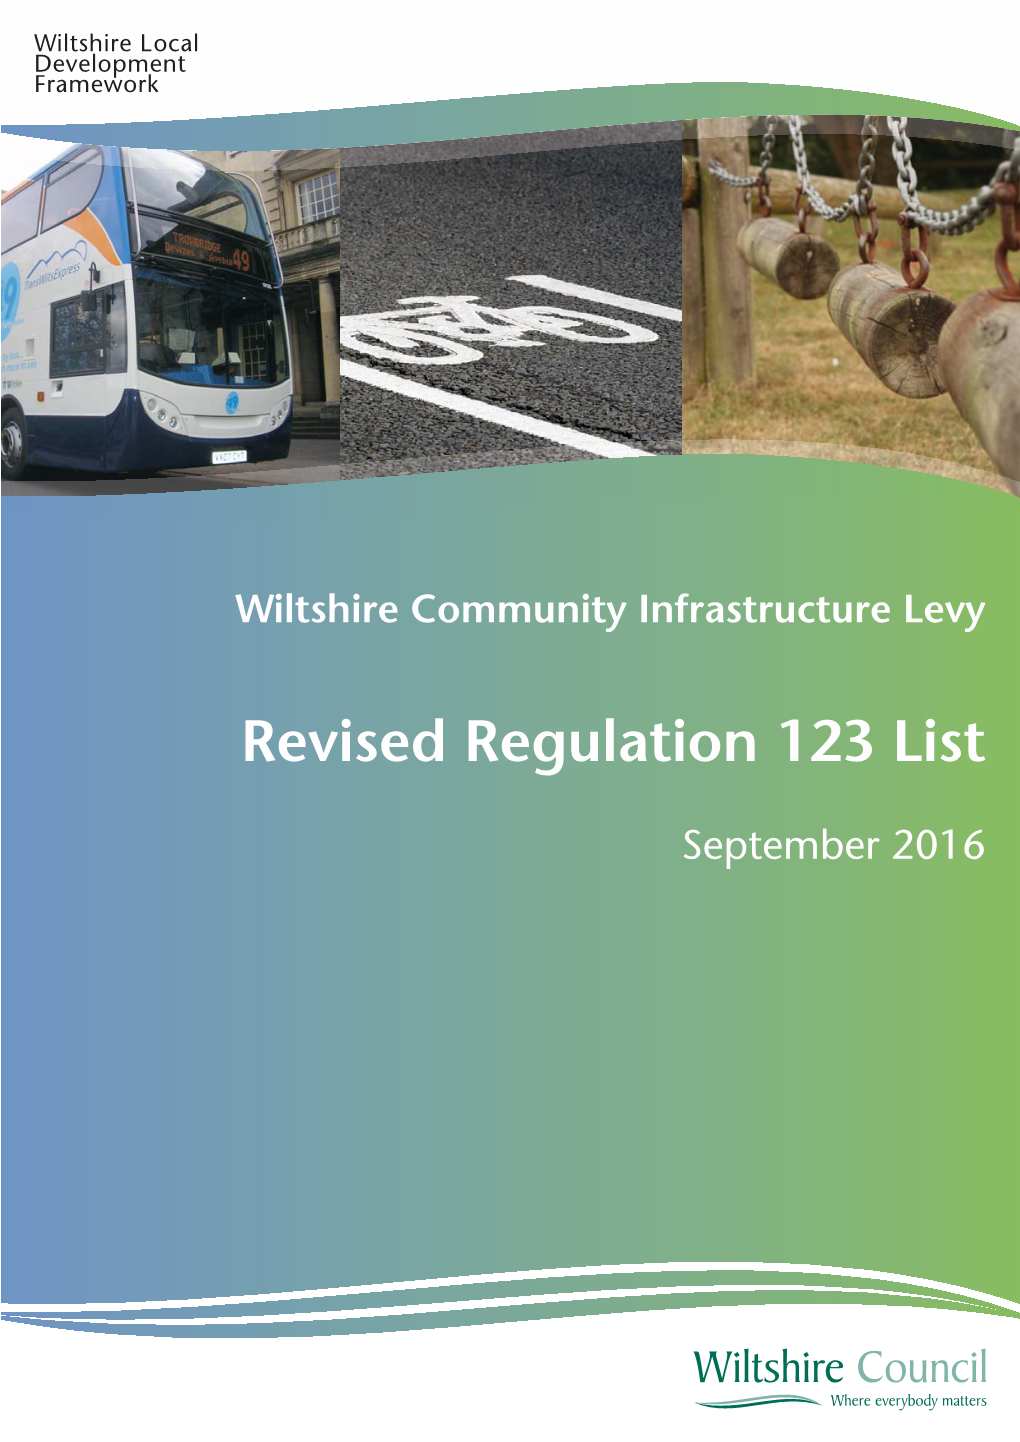 Revised Regulation 123 List